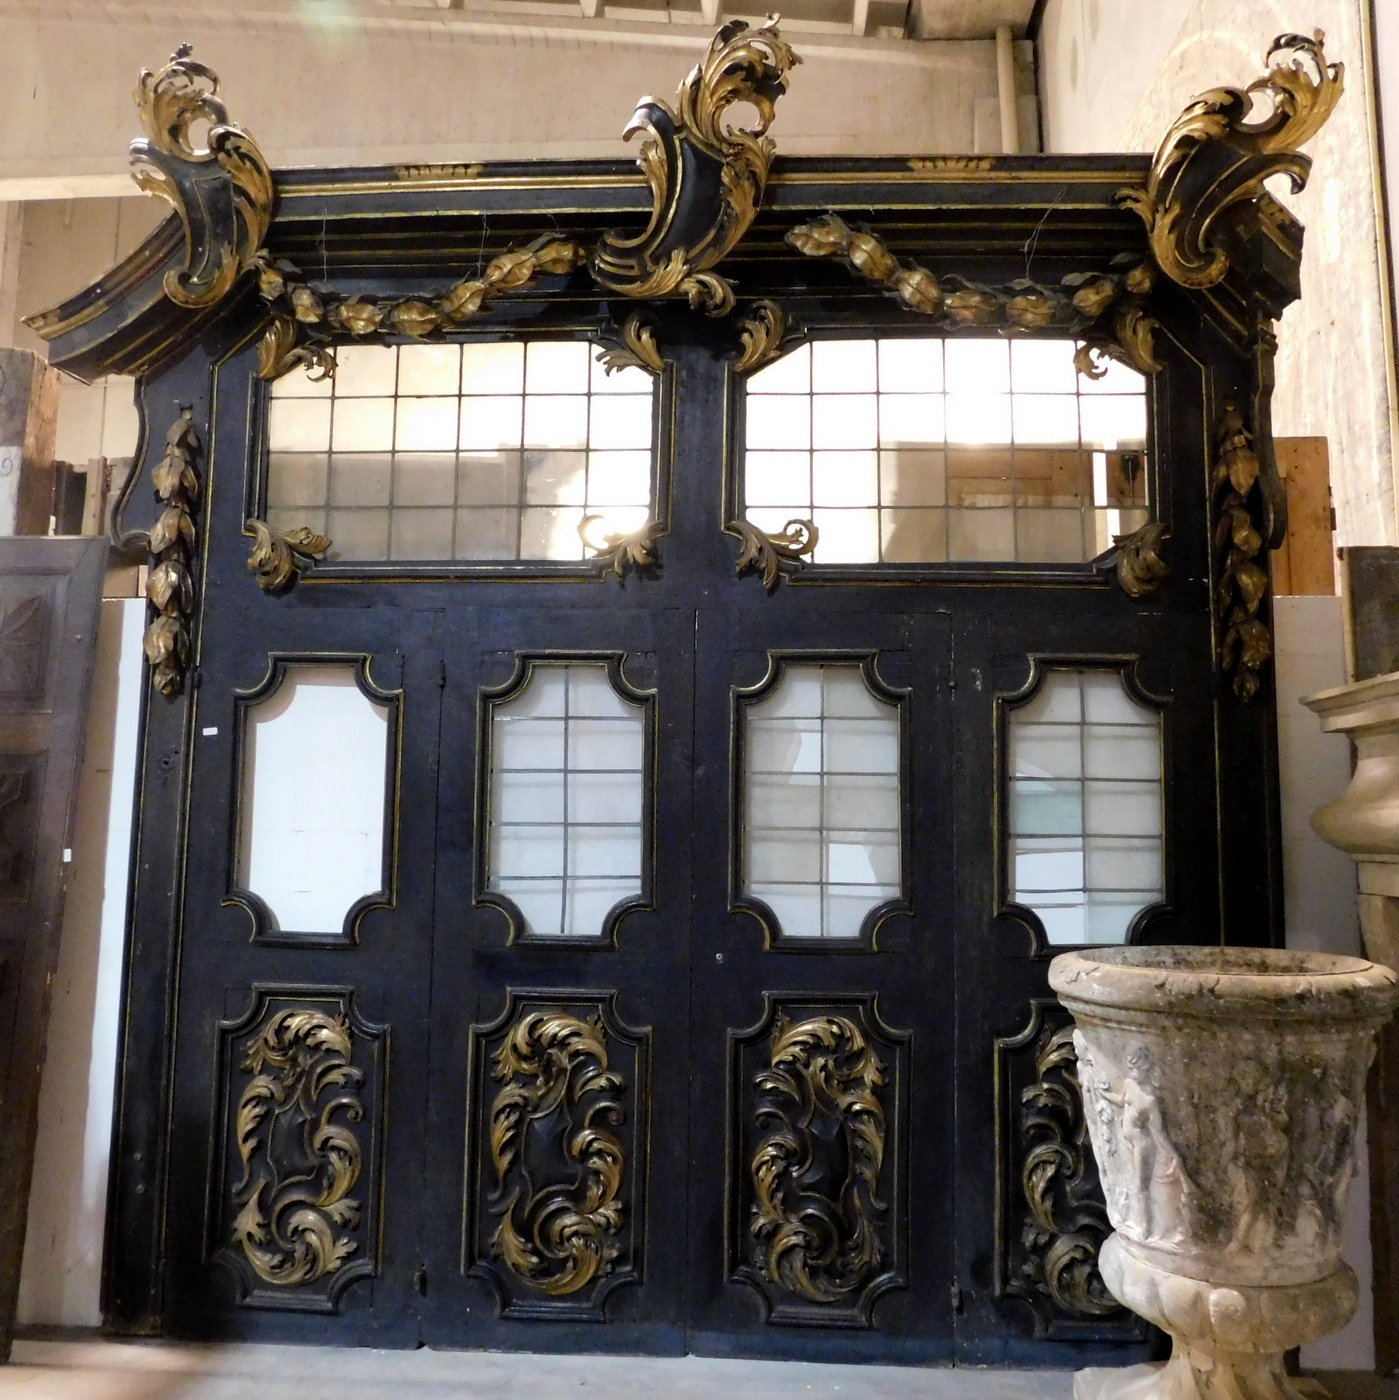 A ptn231 large sixteenth-century glass portal,h cm420 x 435 width